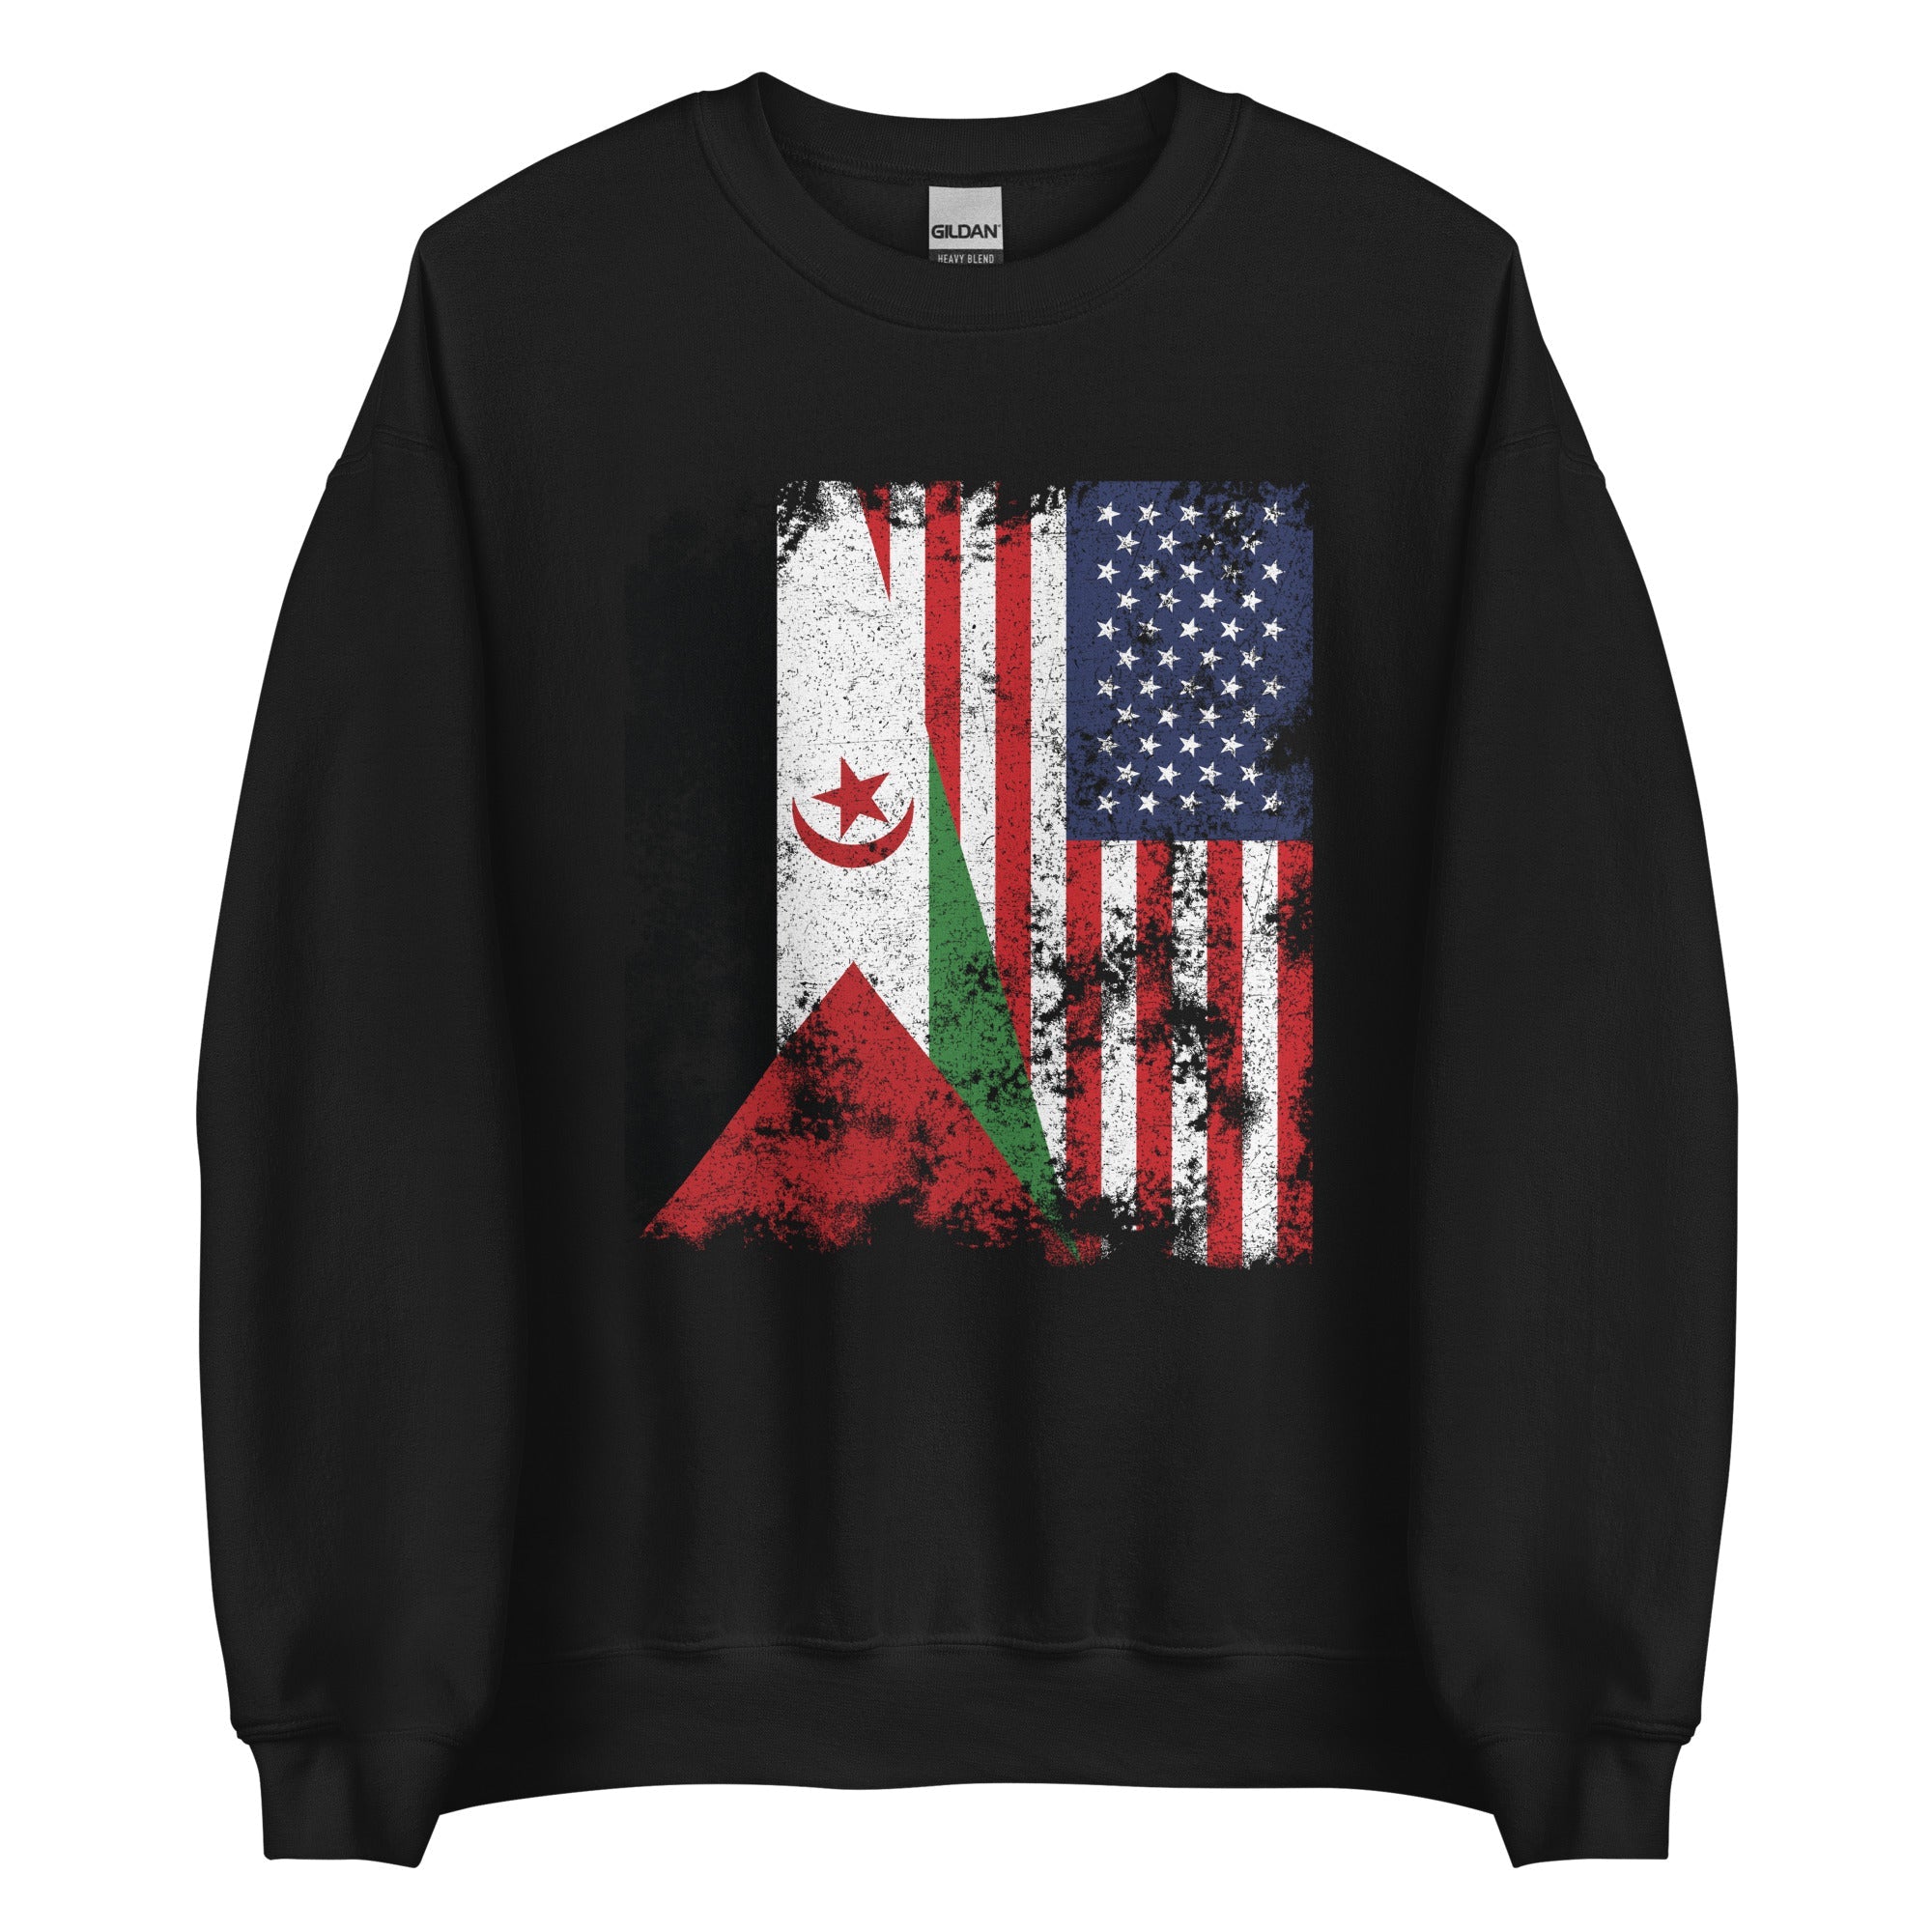 Western Sahara USA Flag - Half American Sweatshirt